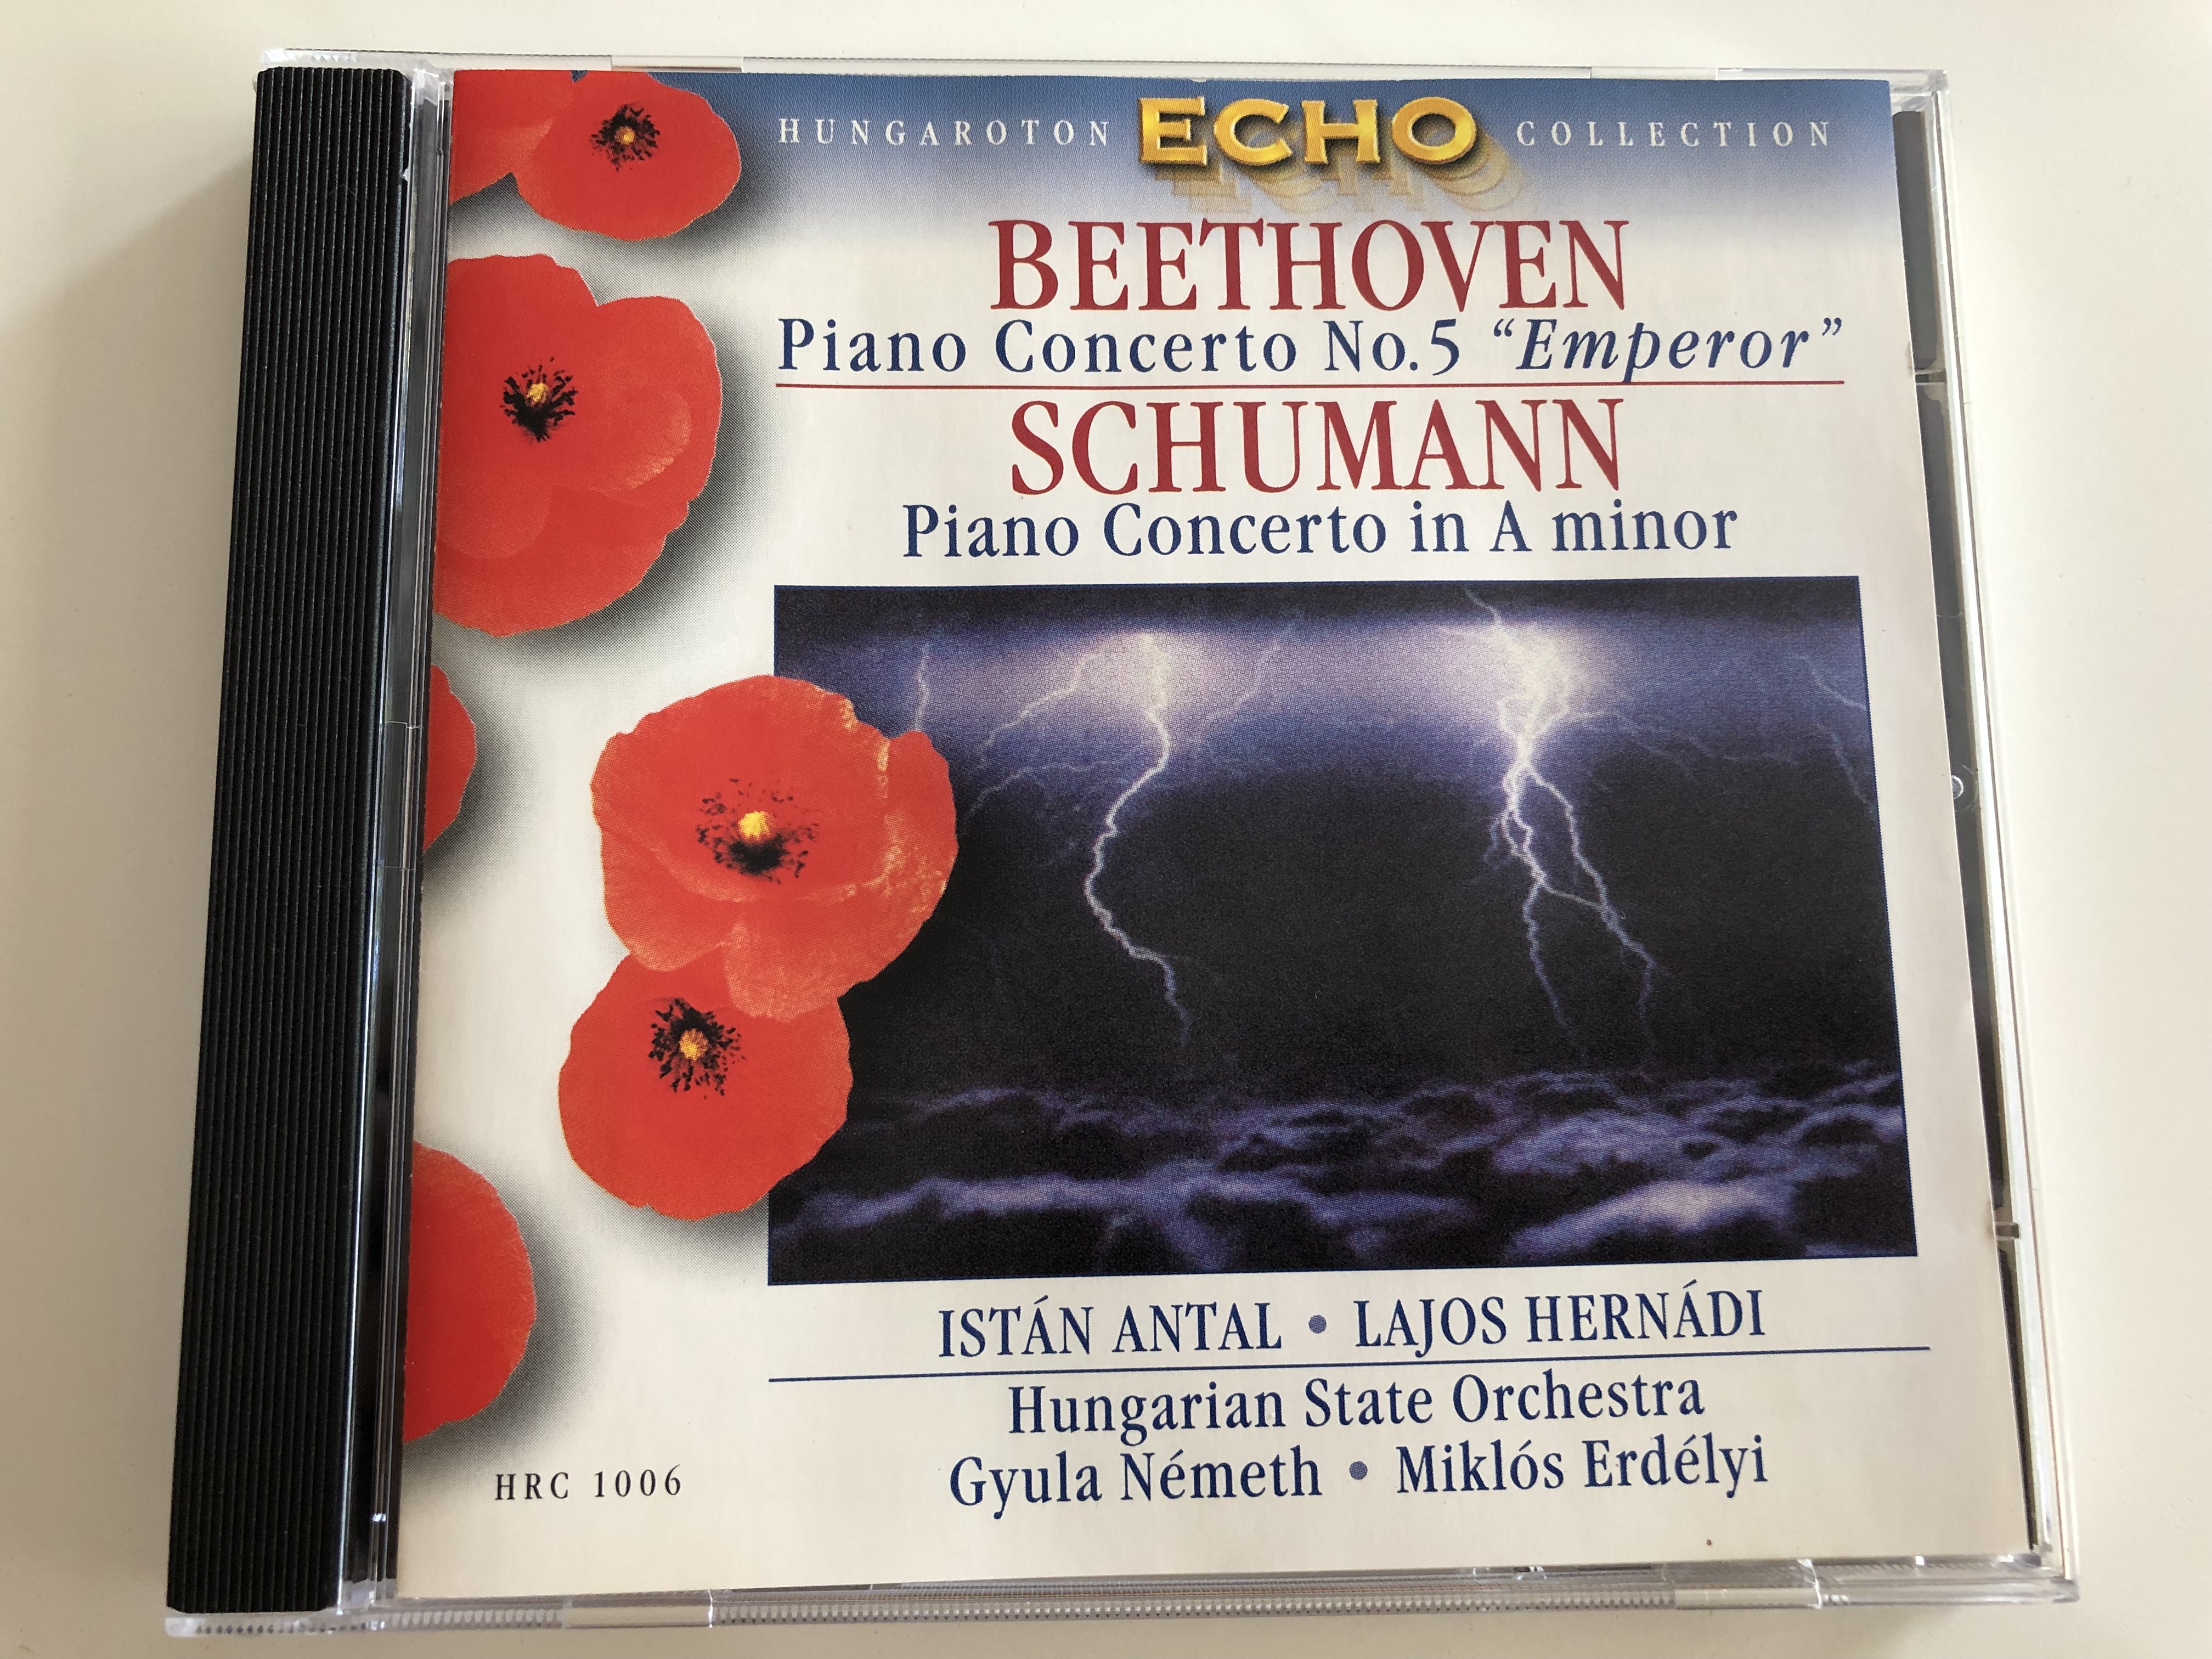 beethoven-piano-concerto-no.5-emperor-schumann-piano-concerto-in-a-minor-istv-n-antal-lajos-hern-di-hungarian-state-orchestra-hungaroton-echo-collection-hrc-1006-audio-cd-1999-1-.jpg